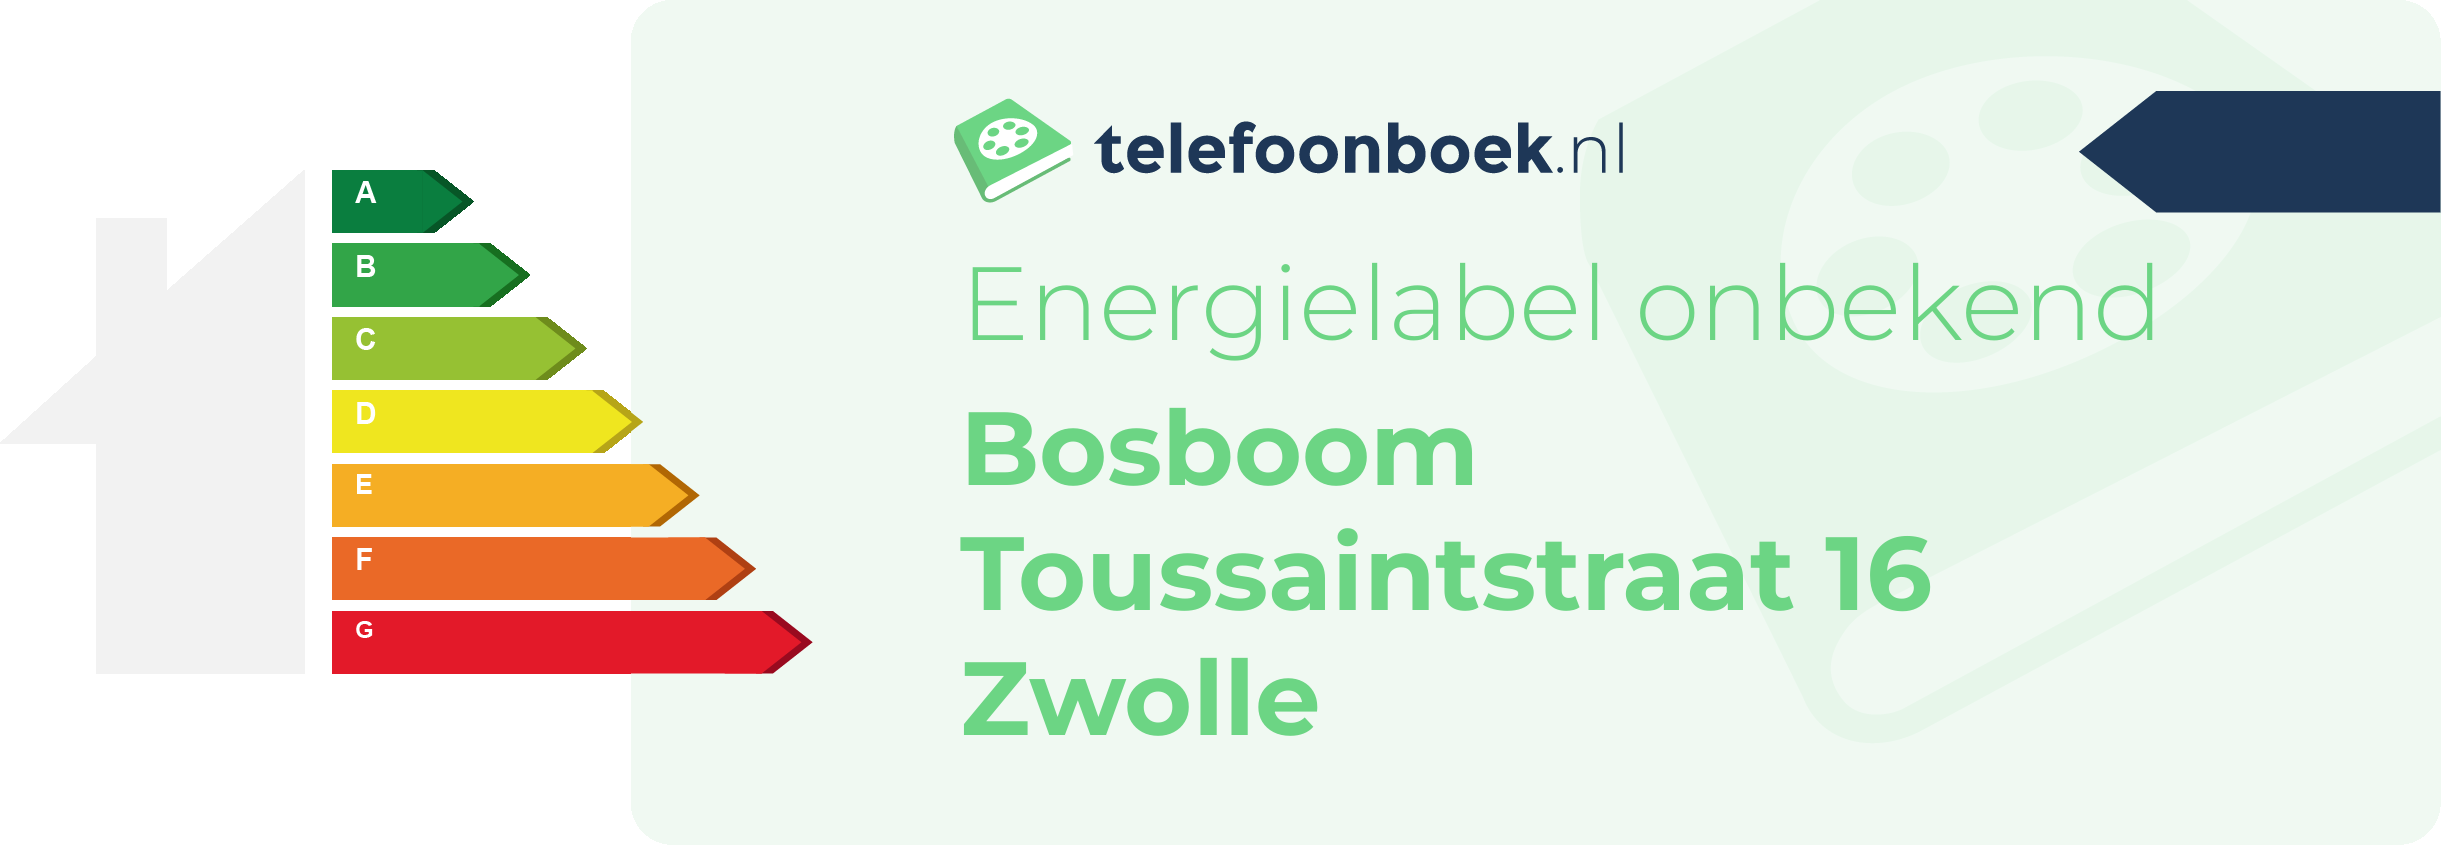 Energielabel Bosboom Toussaintstraat 16 Zwolle